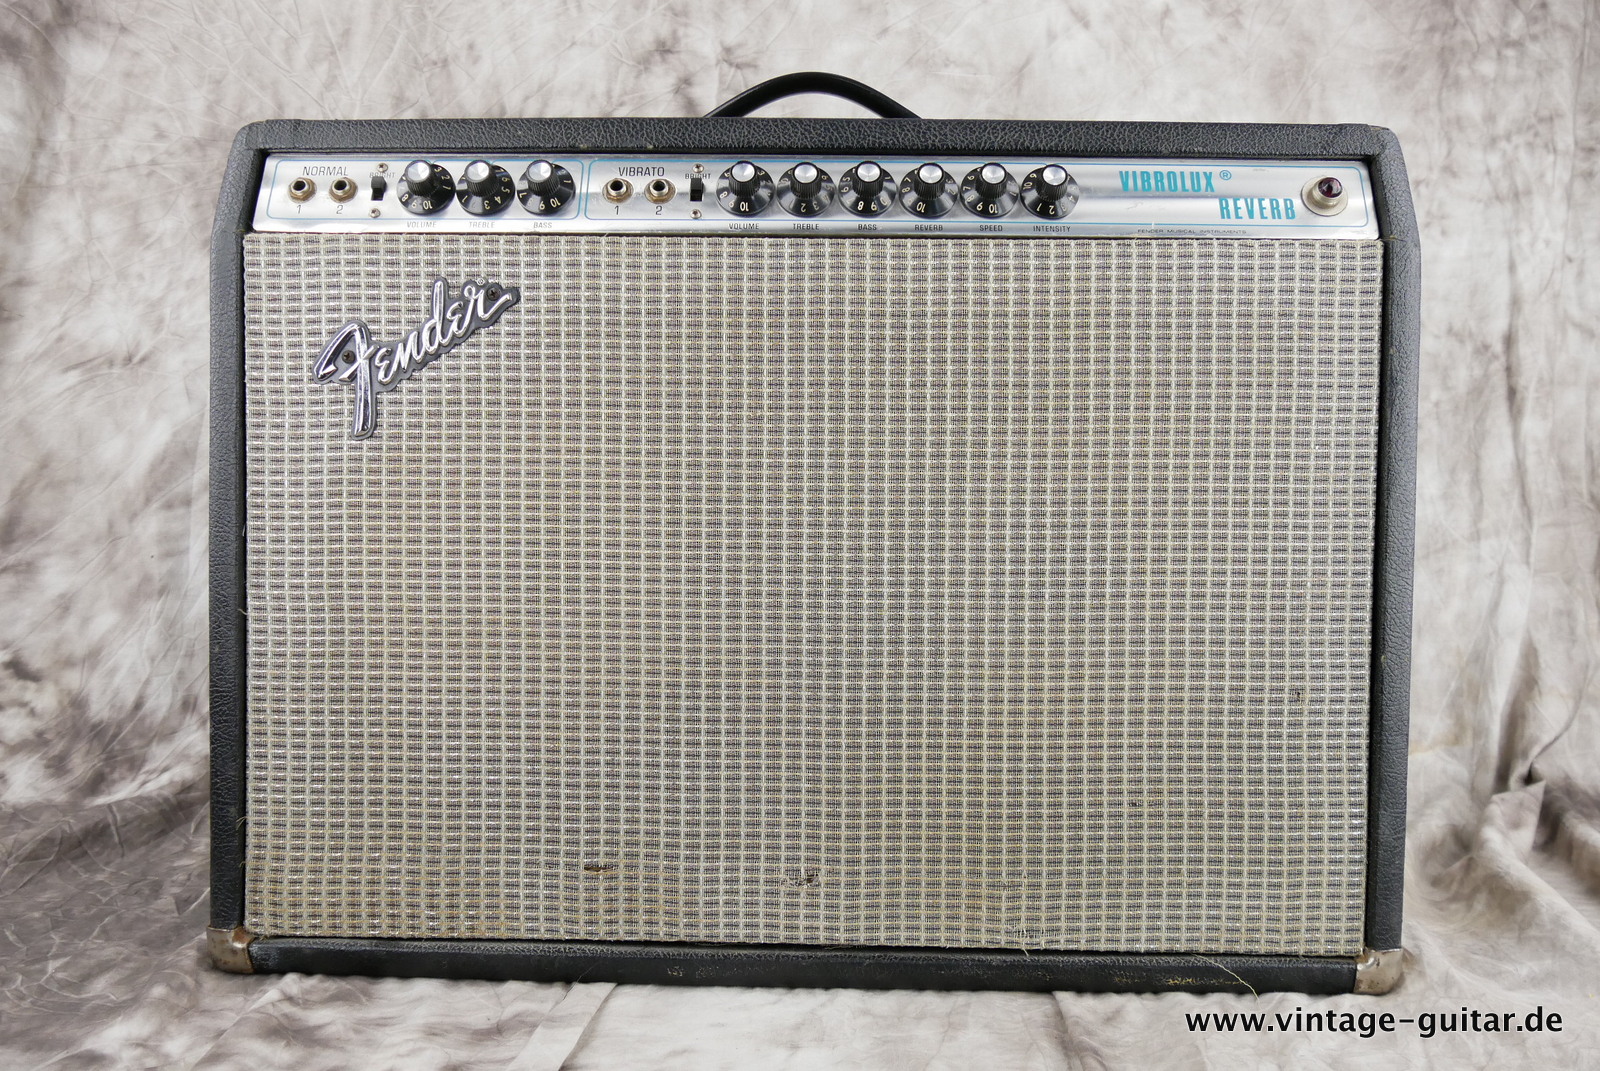 Fender_Vibrolux_Reverb_silverface_1974-001.JPG